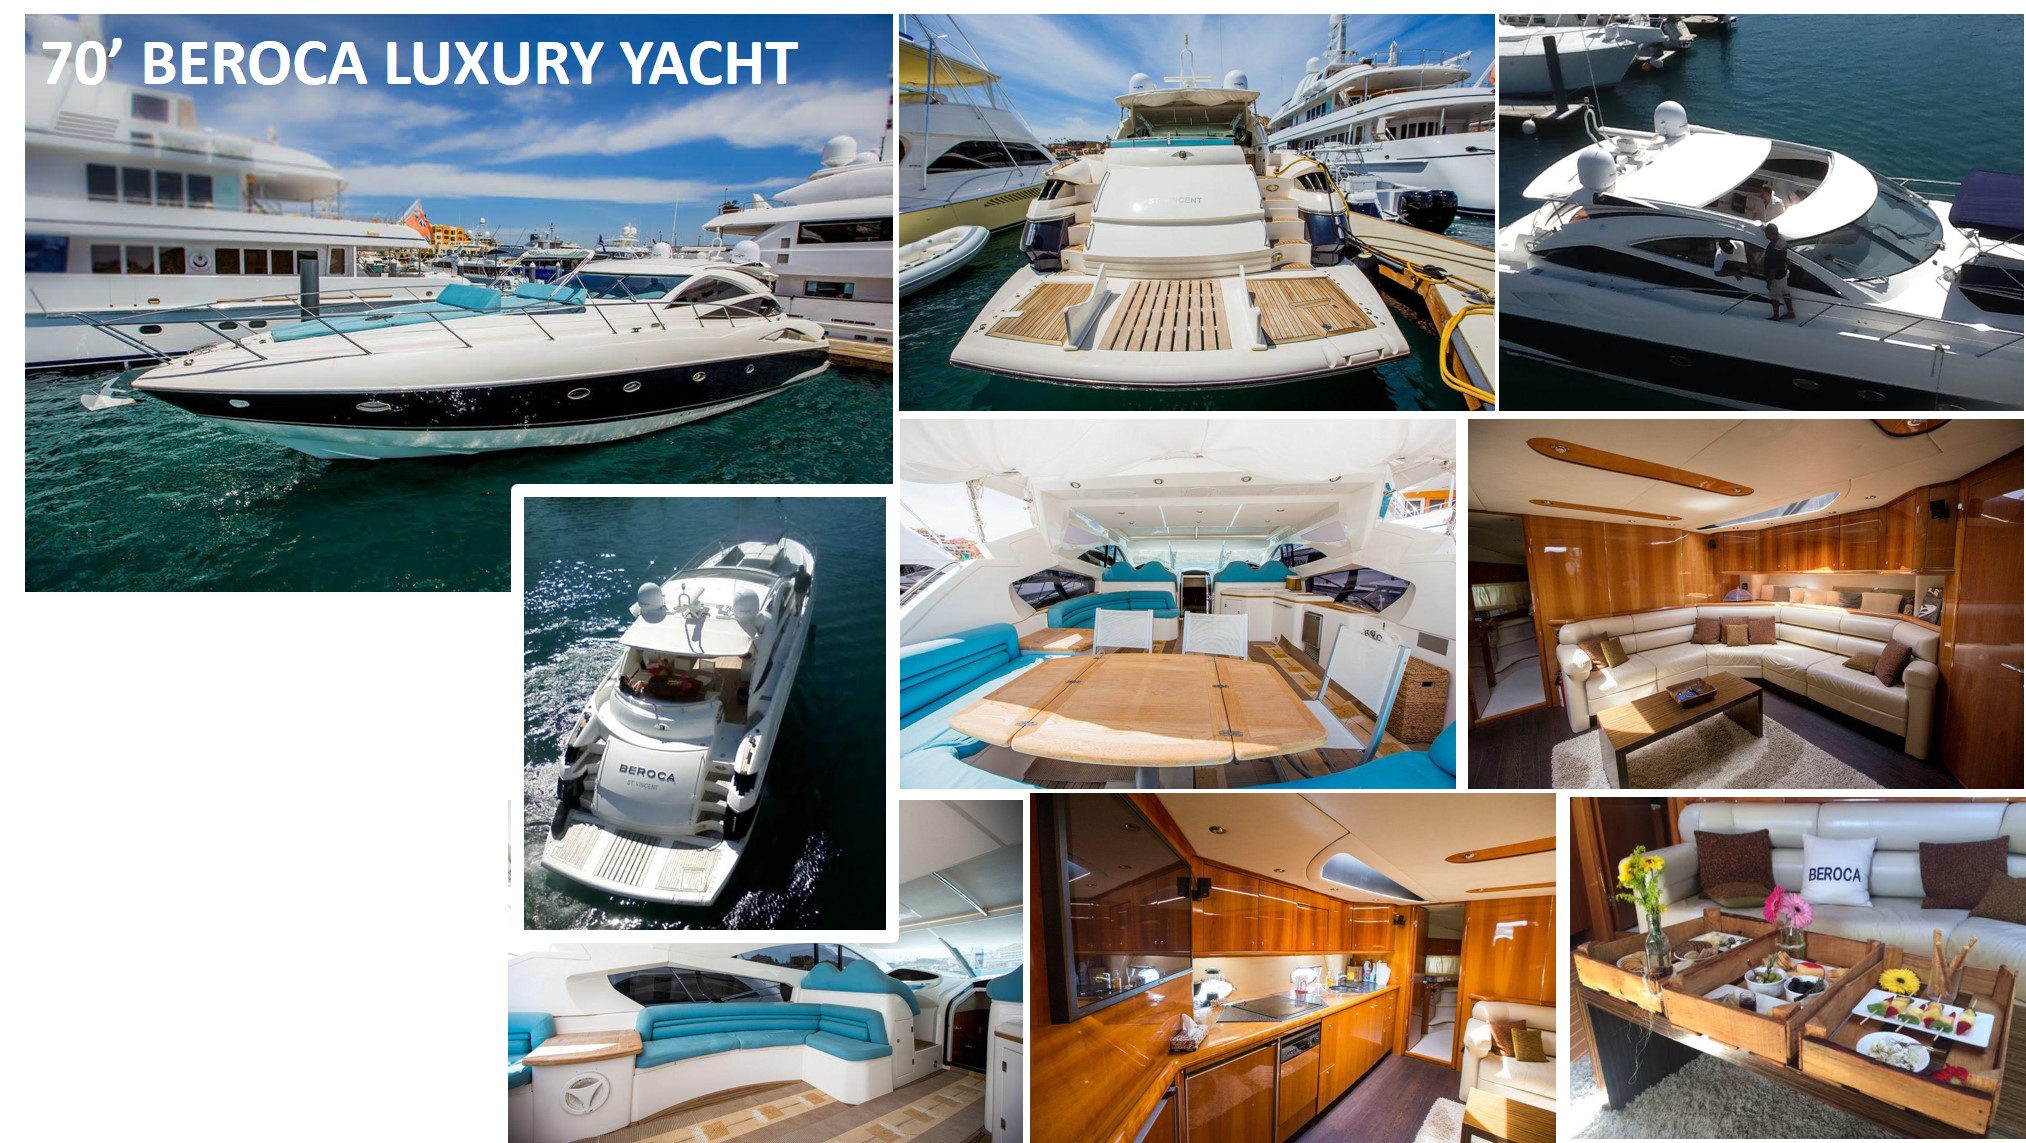 70-Beroca-Luxury-Yacht-Vessel-1